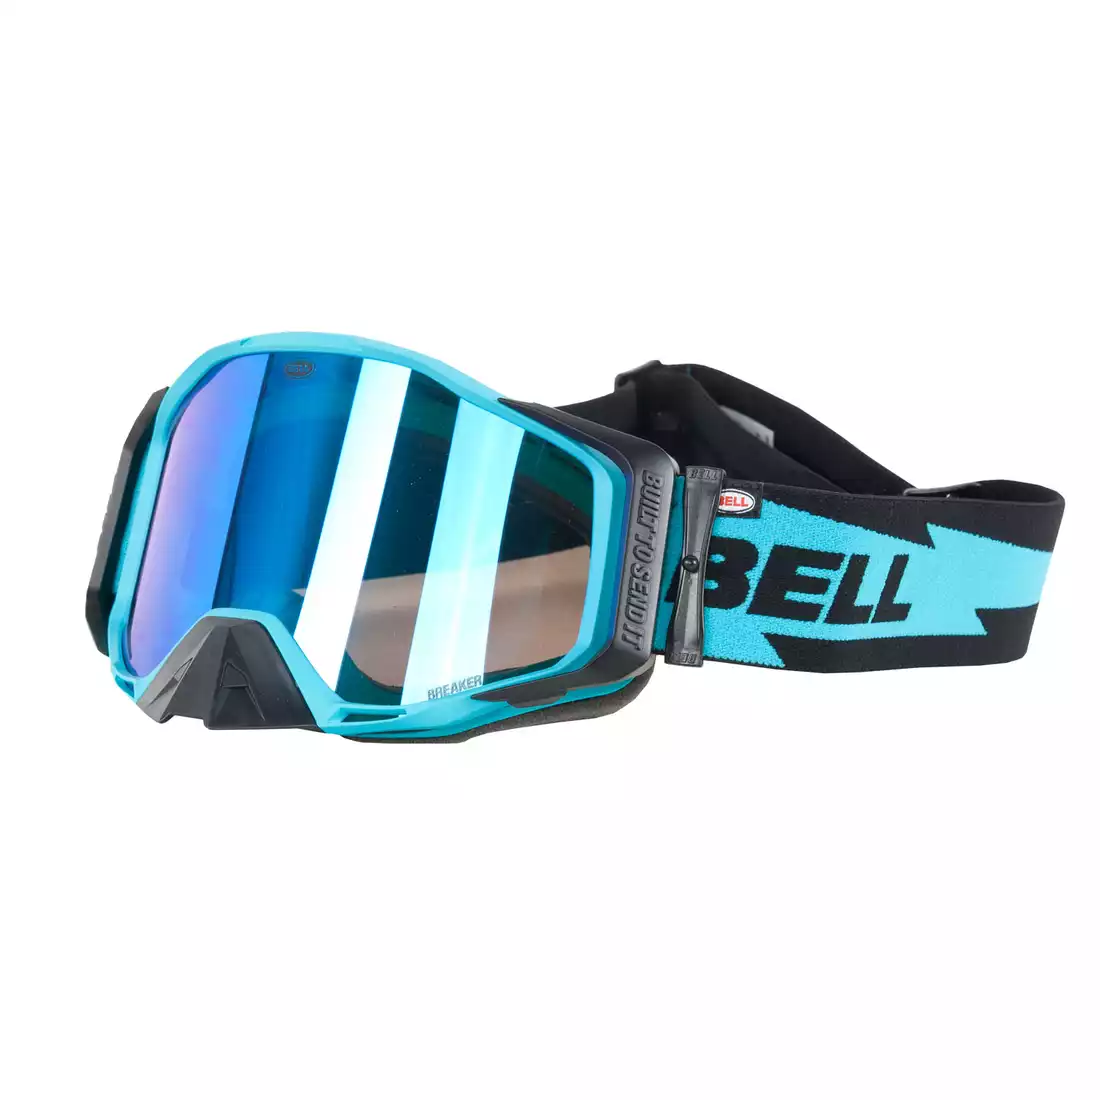 BELL bicycle goggles BREAKER Bolt Matte Black/Blue (REFLEX REVO BLUE MIRROR - SMOKE TINT) BEL-7122856